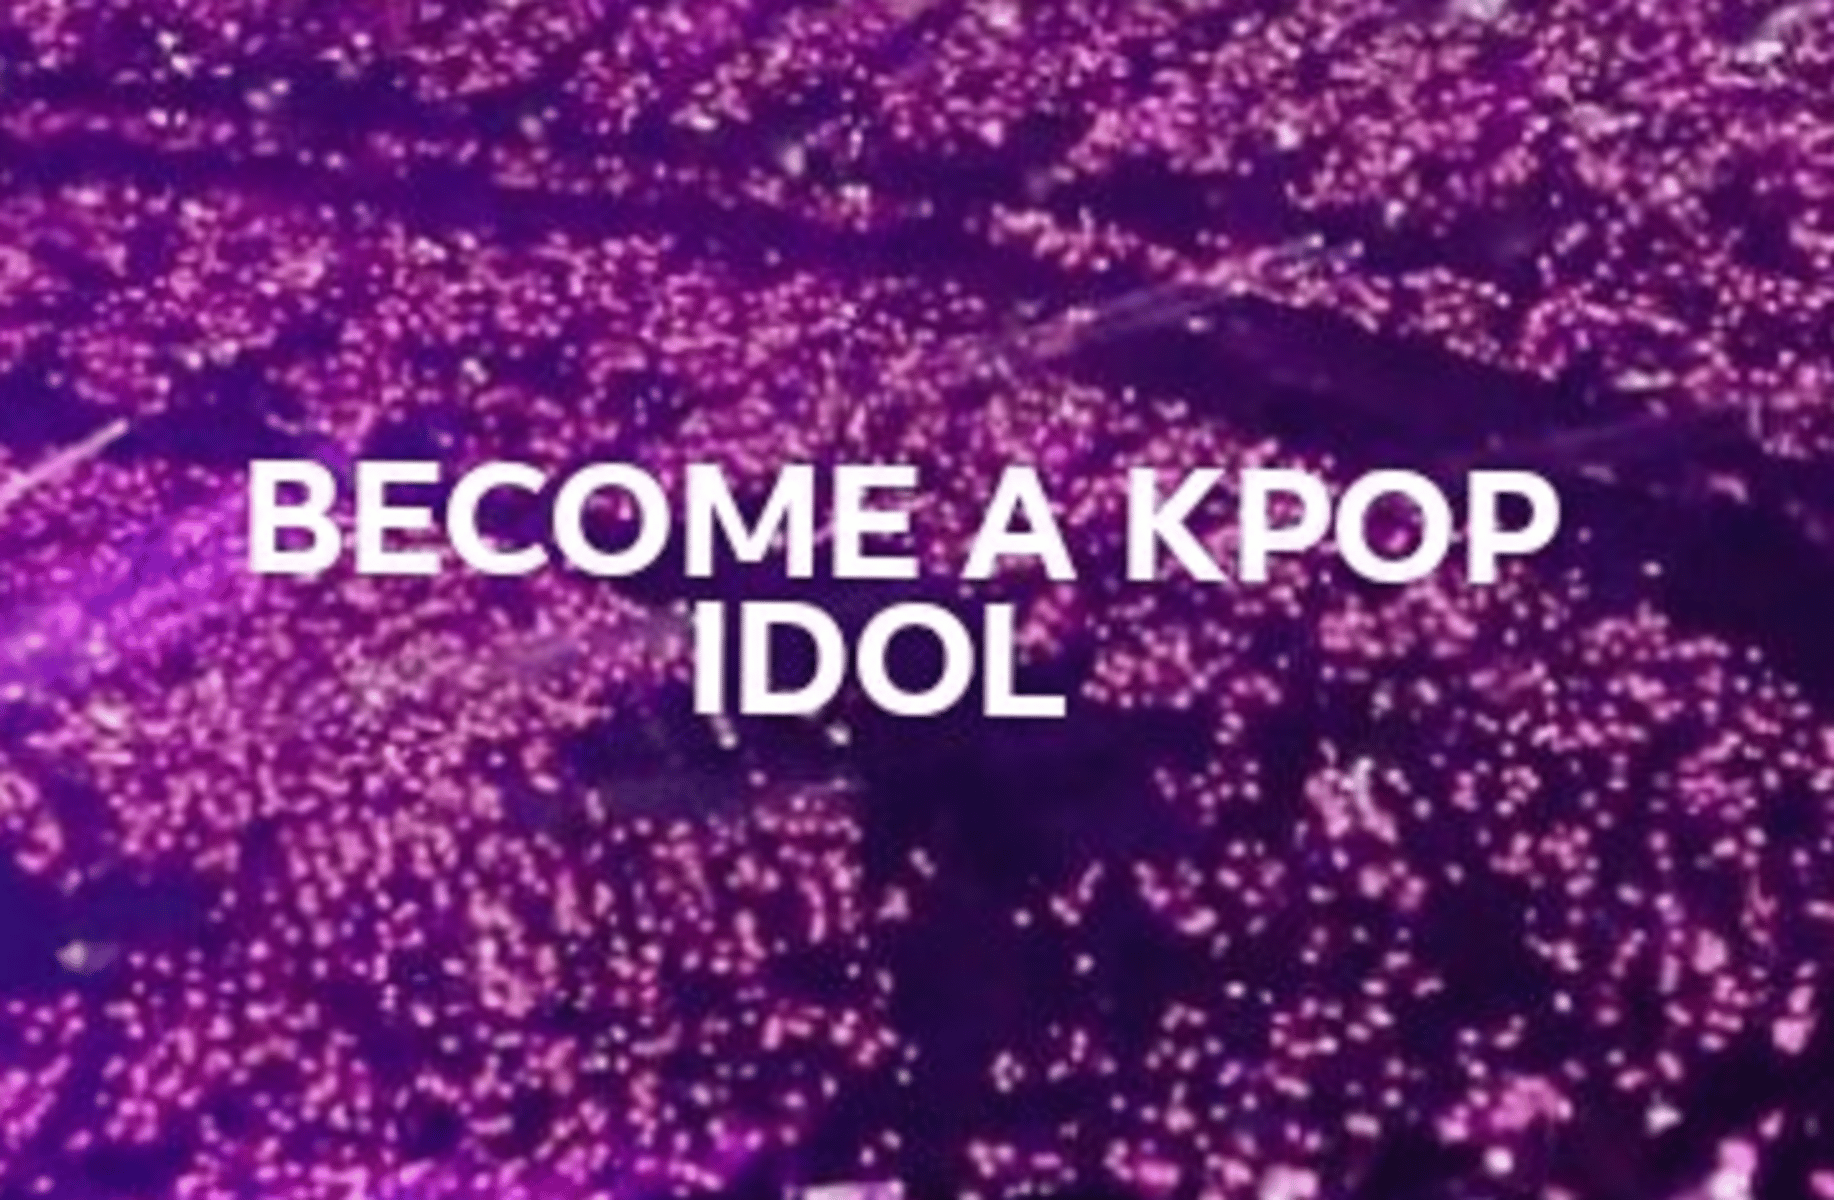 Kpop idol simulation